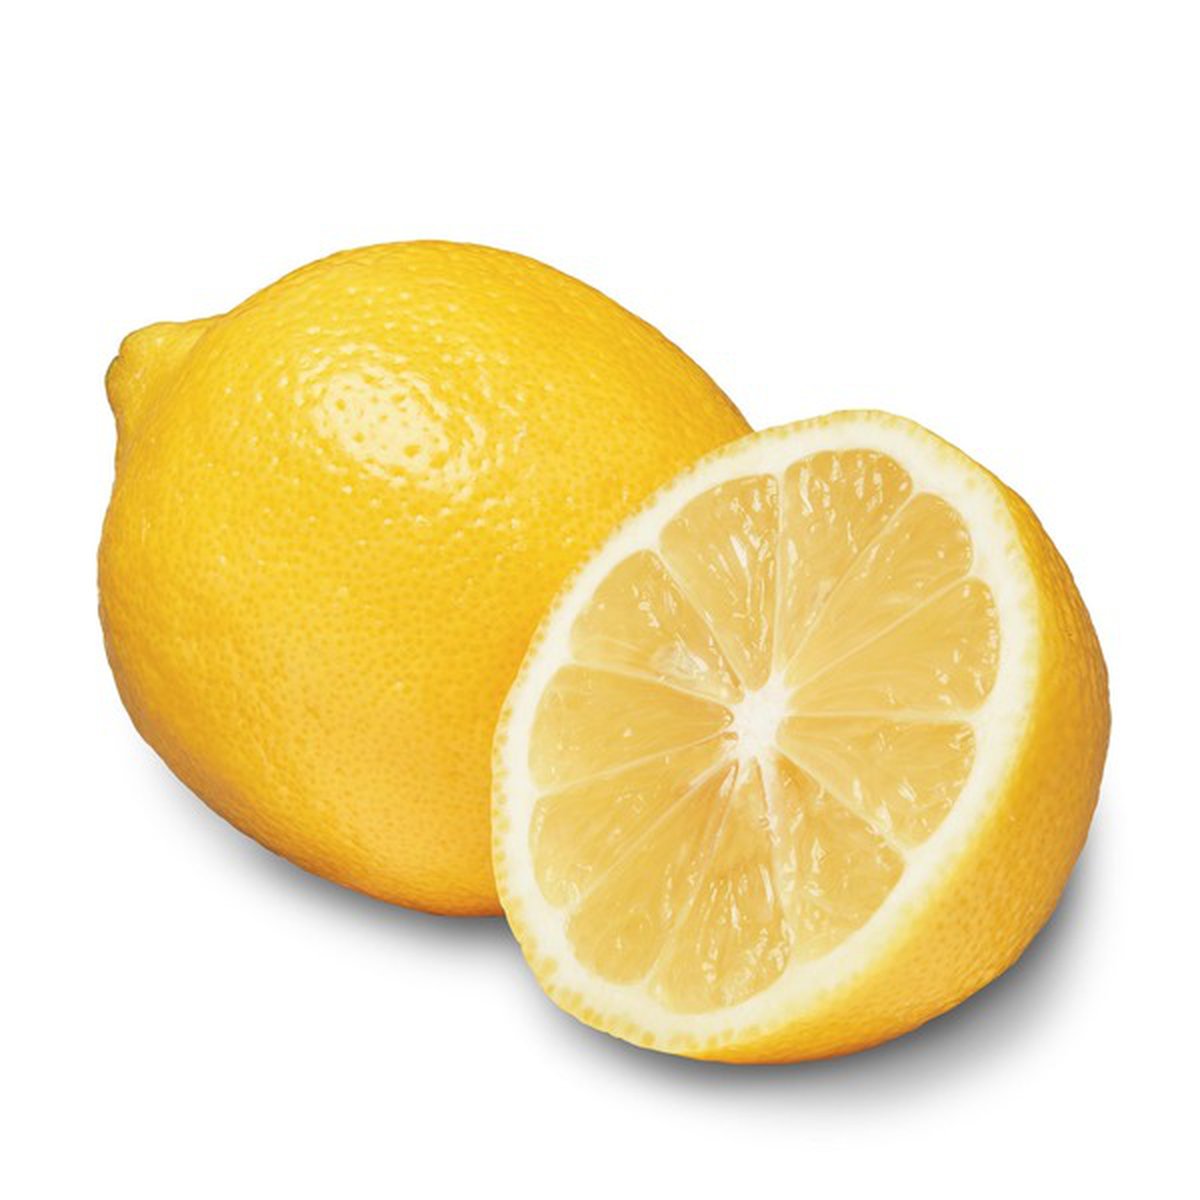 Zest from  a lemon